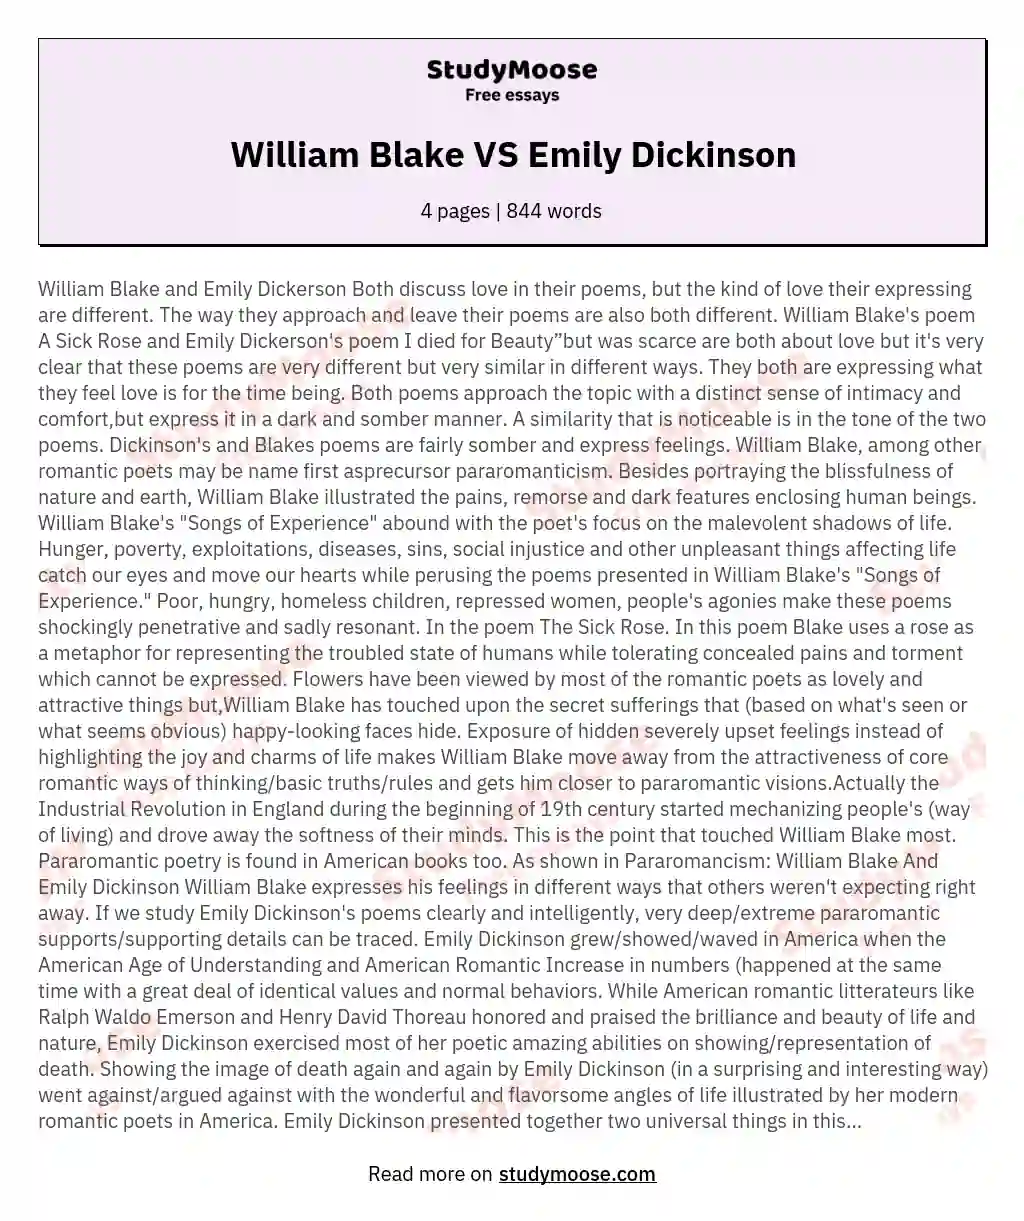 William Blake VS Emily Dickinson